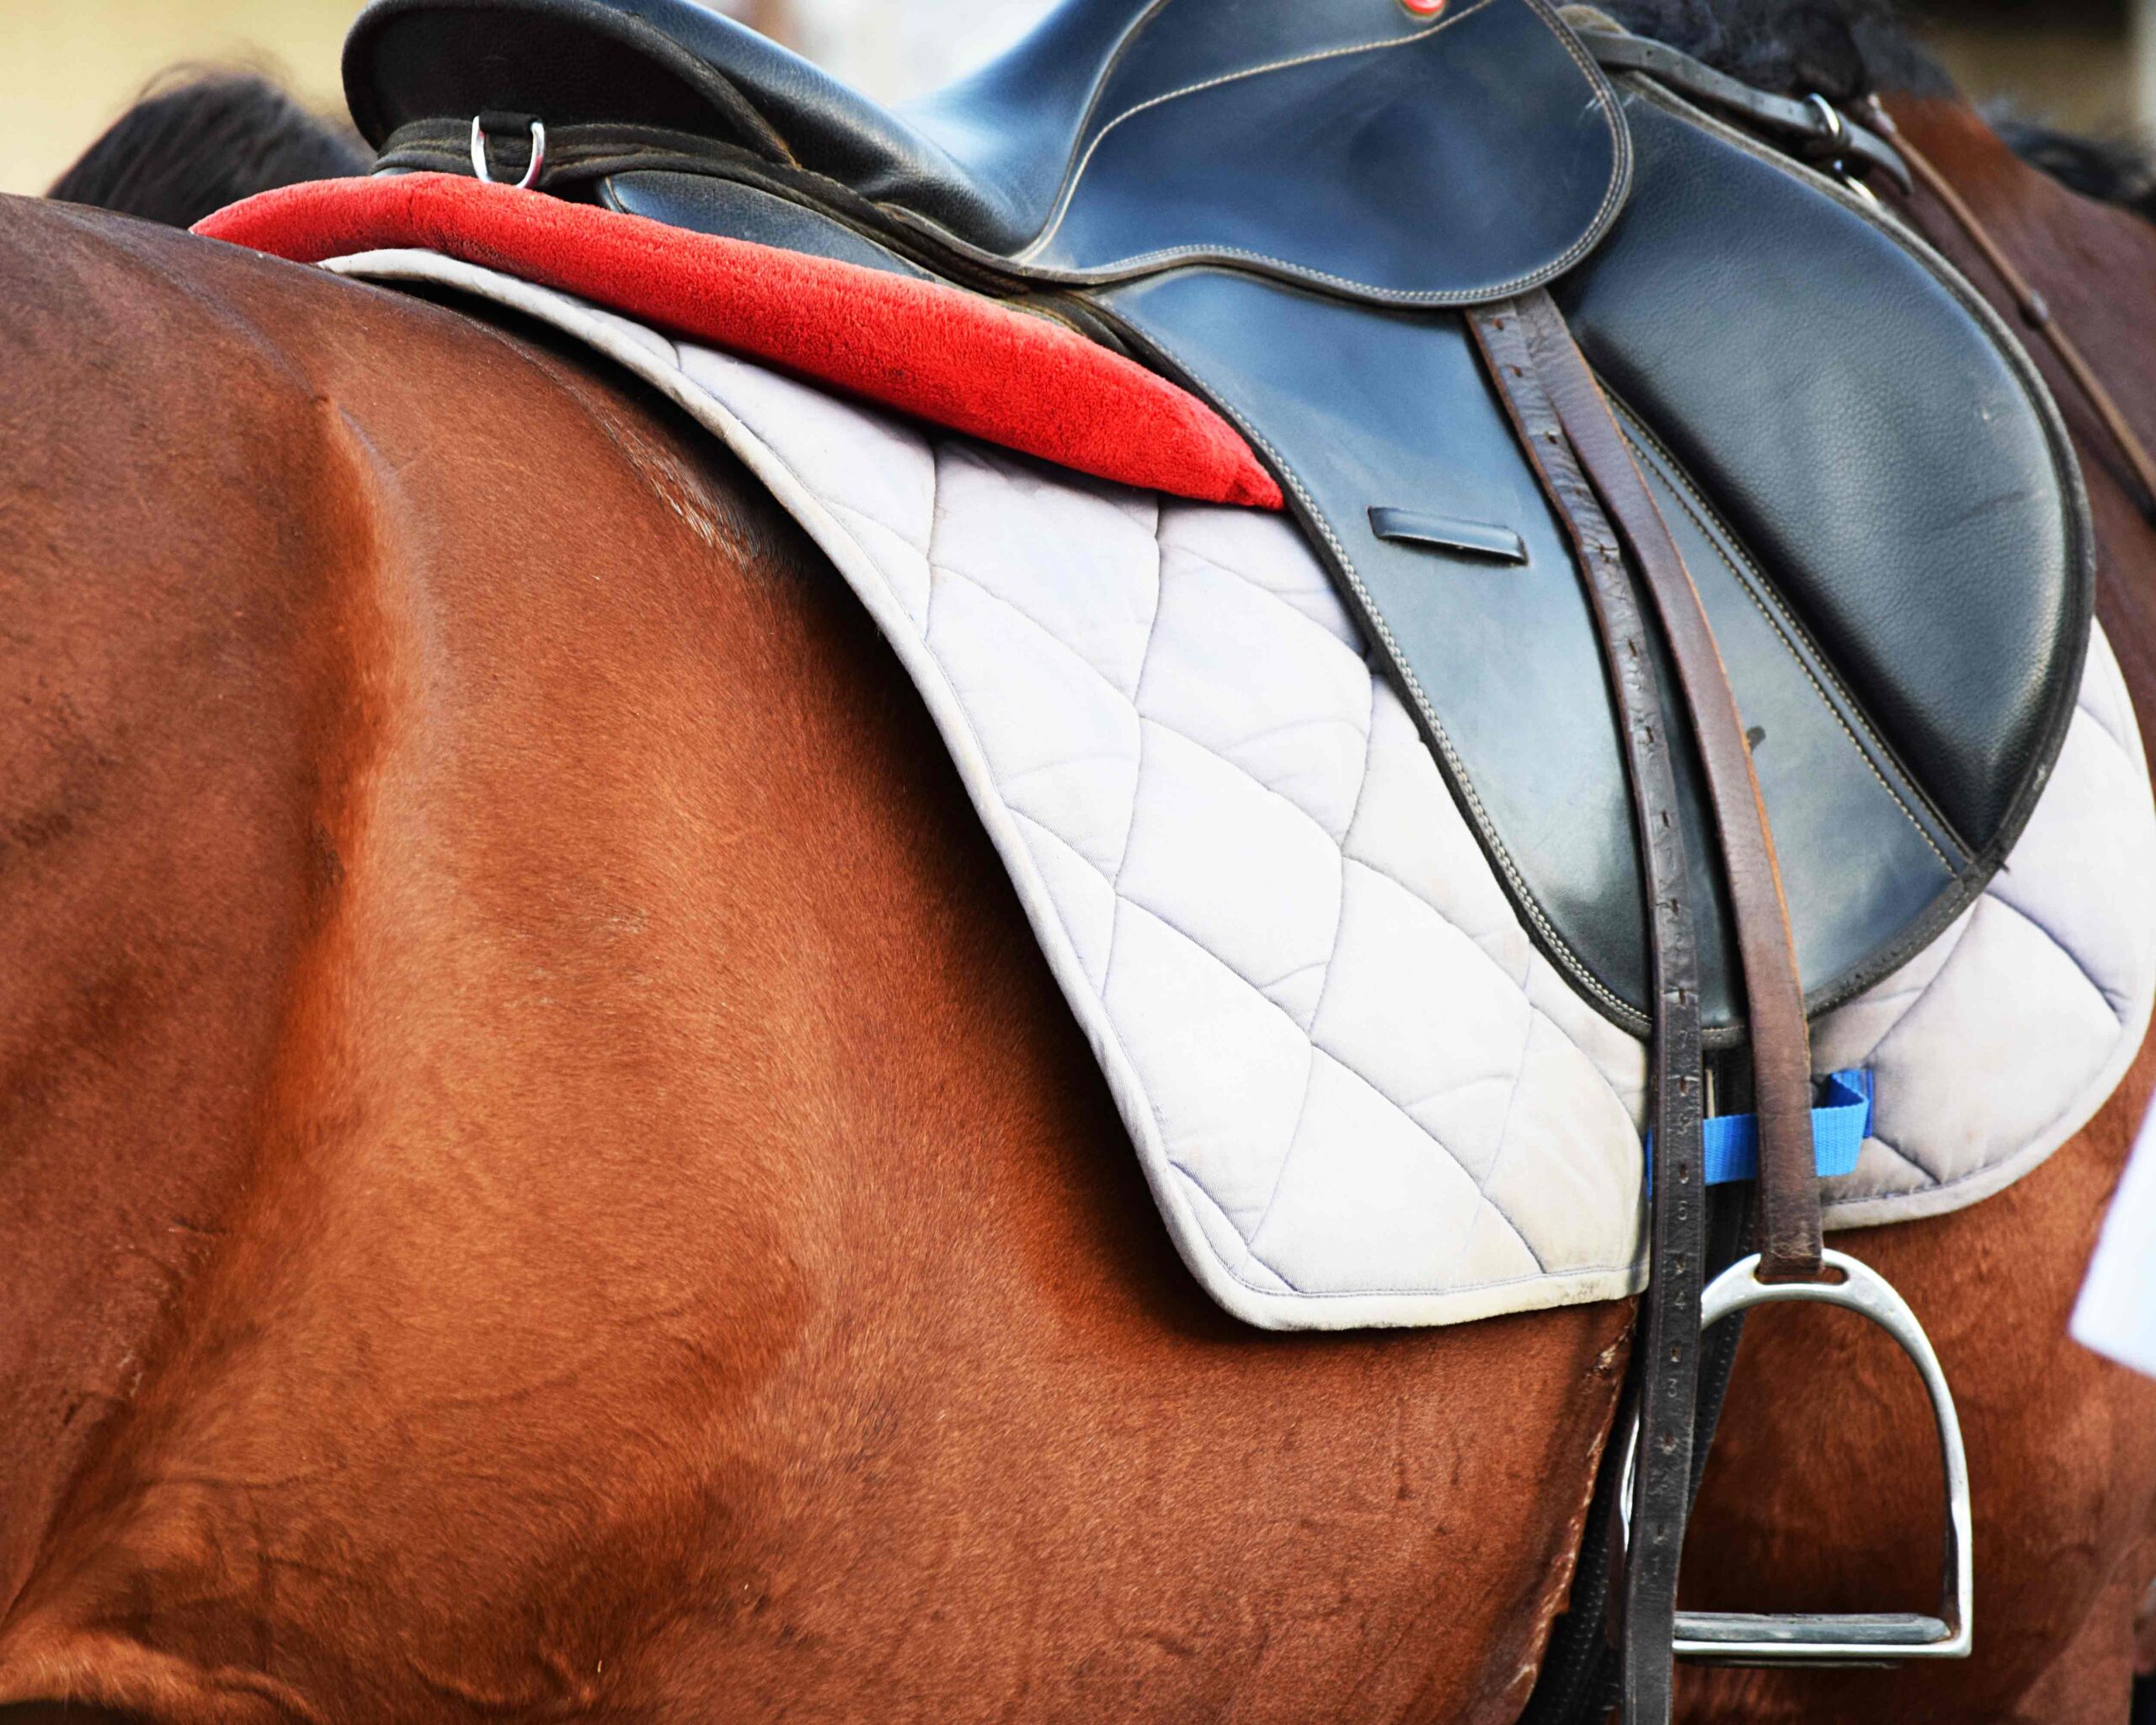 An English saddle on a horse.